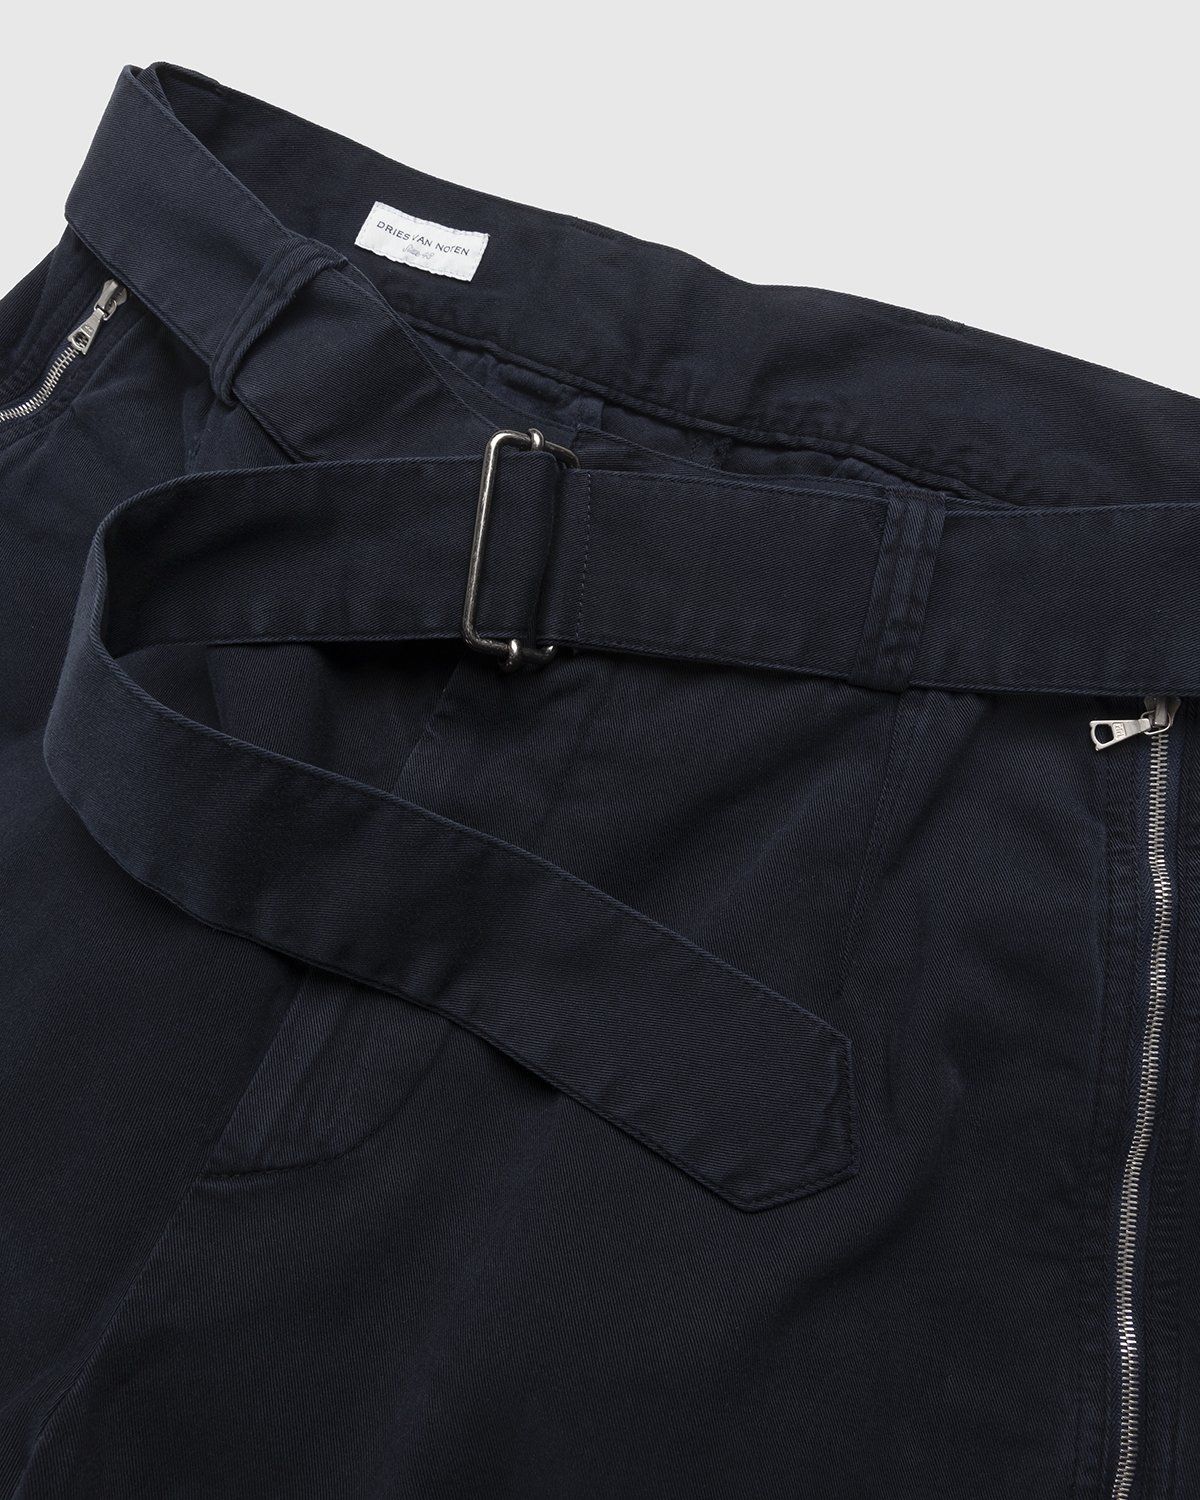 Dries van Noten – Penson Pants Navy - Trousers - Blue - Image 4